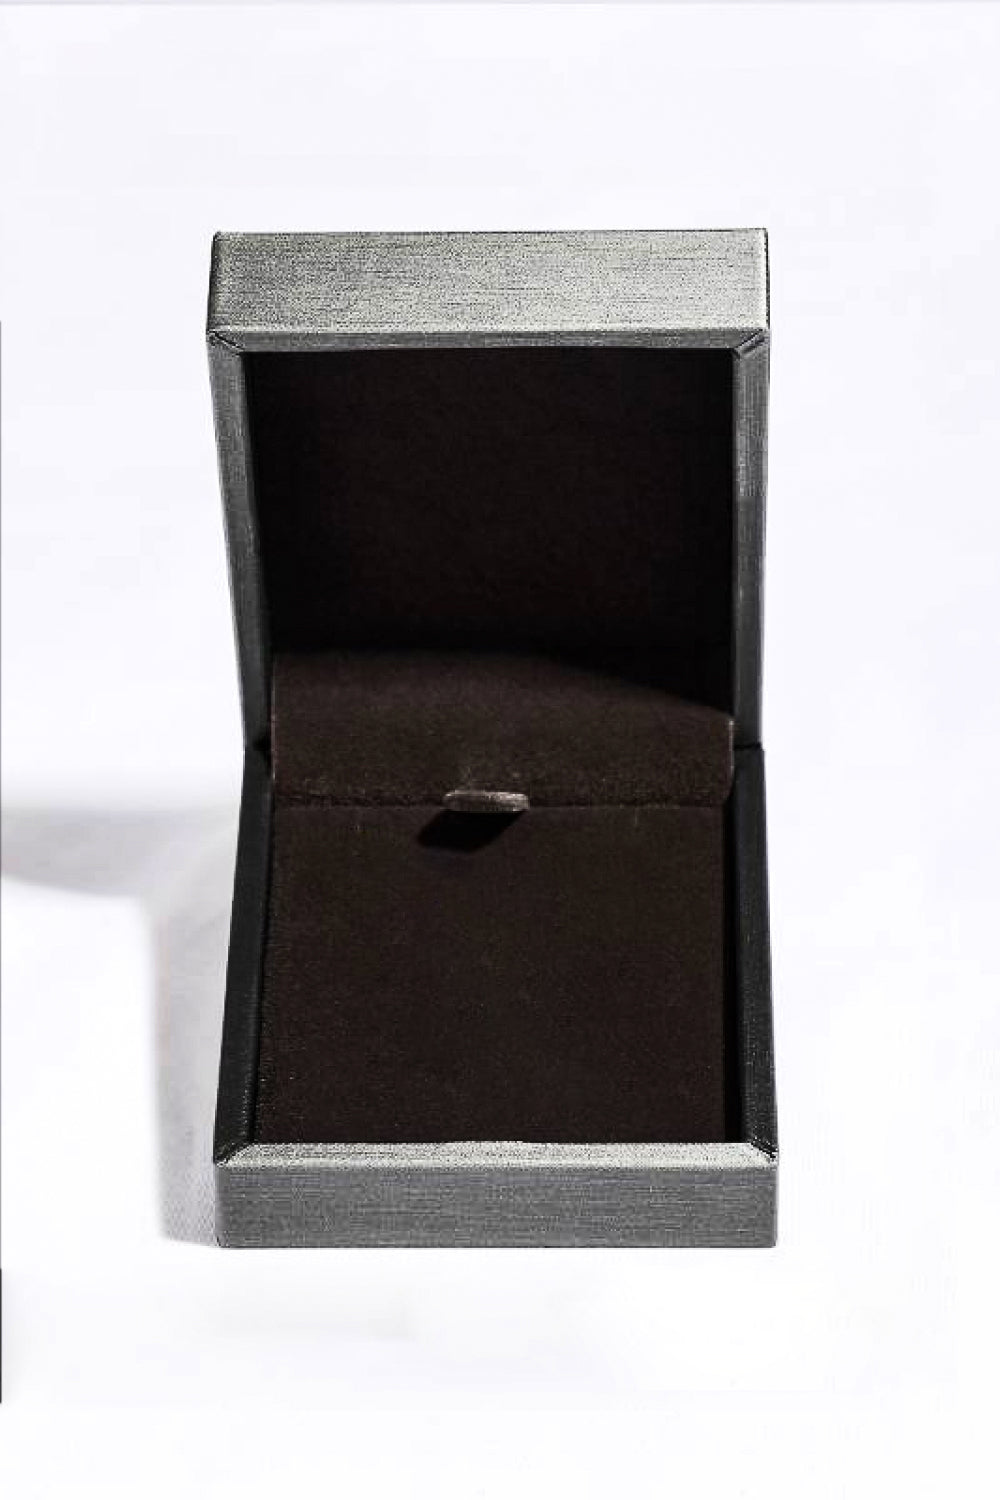 1 Carat Moissanite Open Ring Pendant Necklace